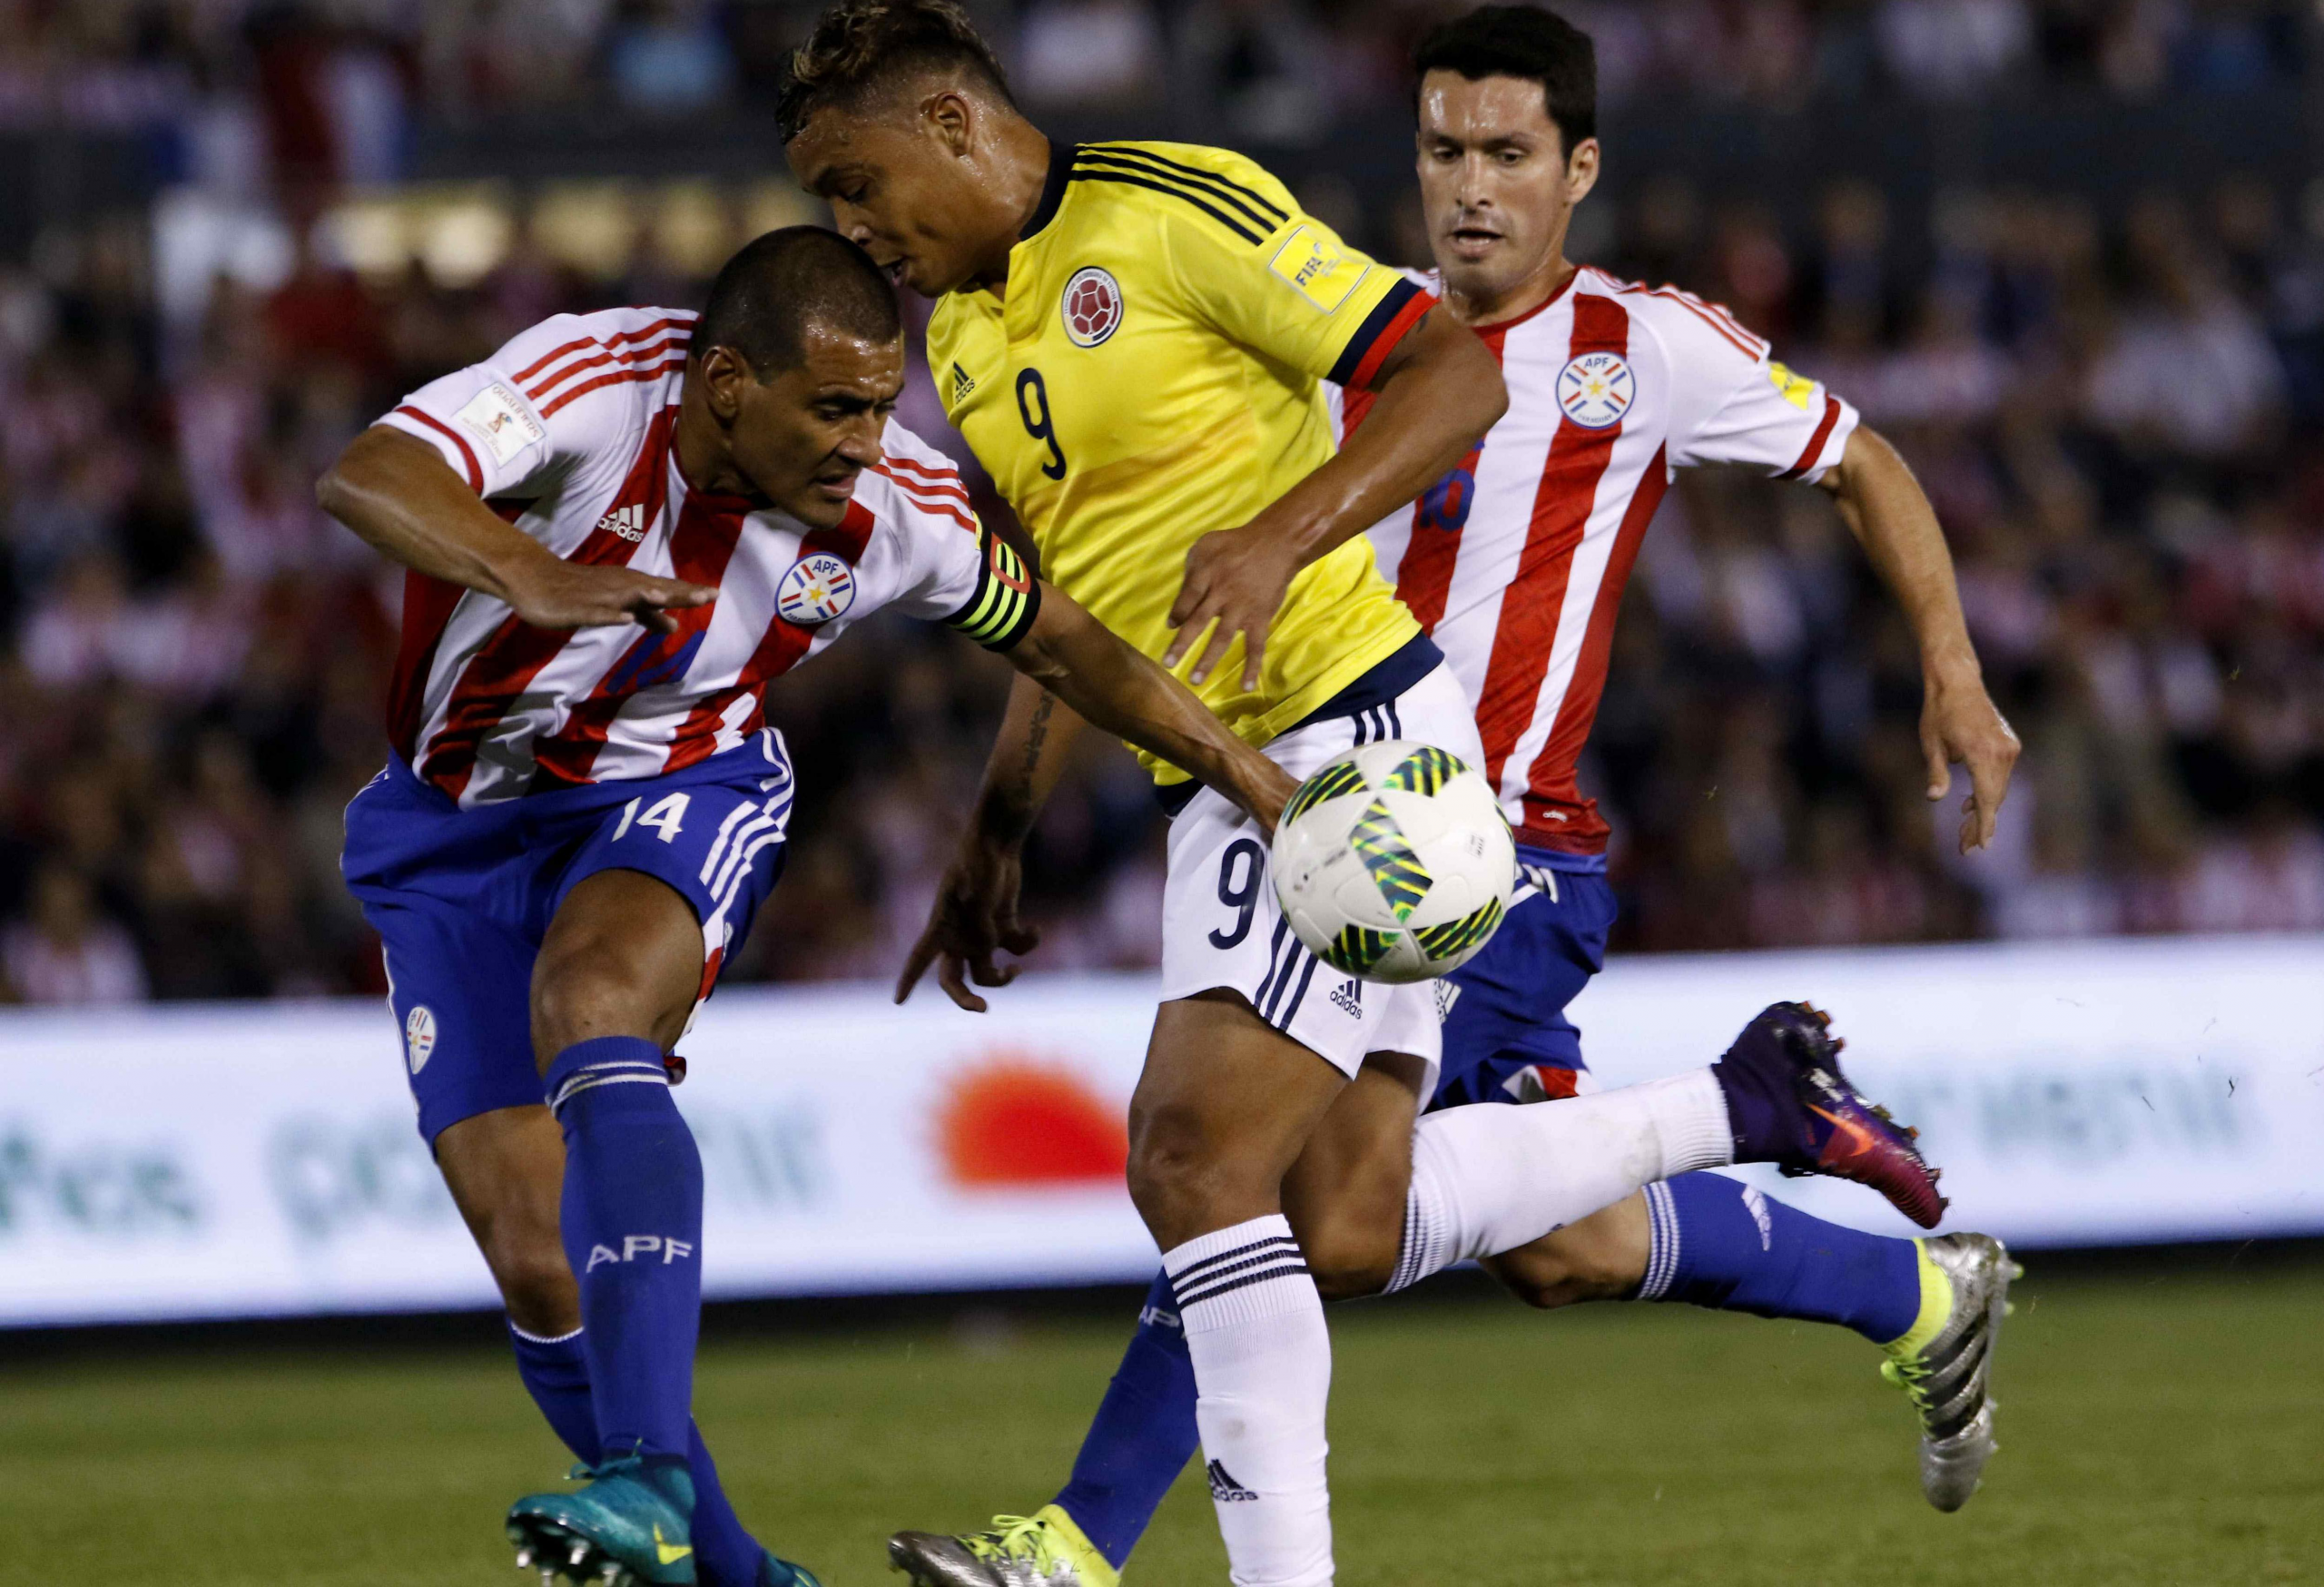 wp image 436146 scaled - 0-1. Colombia derrota a Paraguay con gol de Cardona en un agónico final